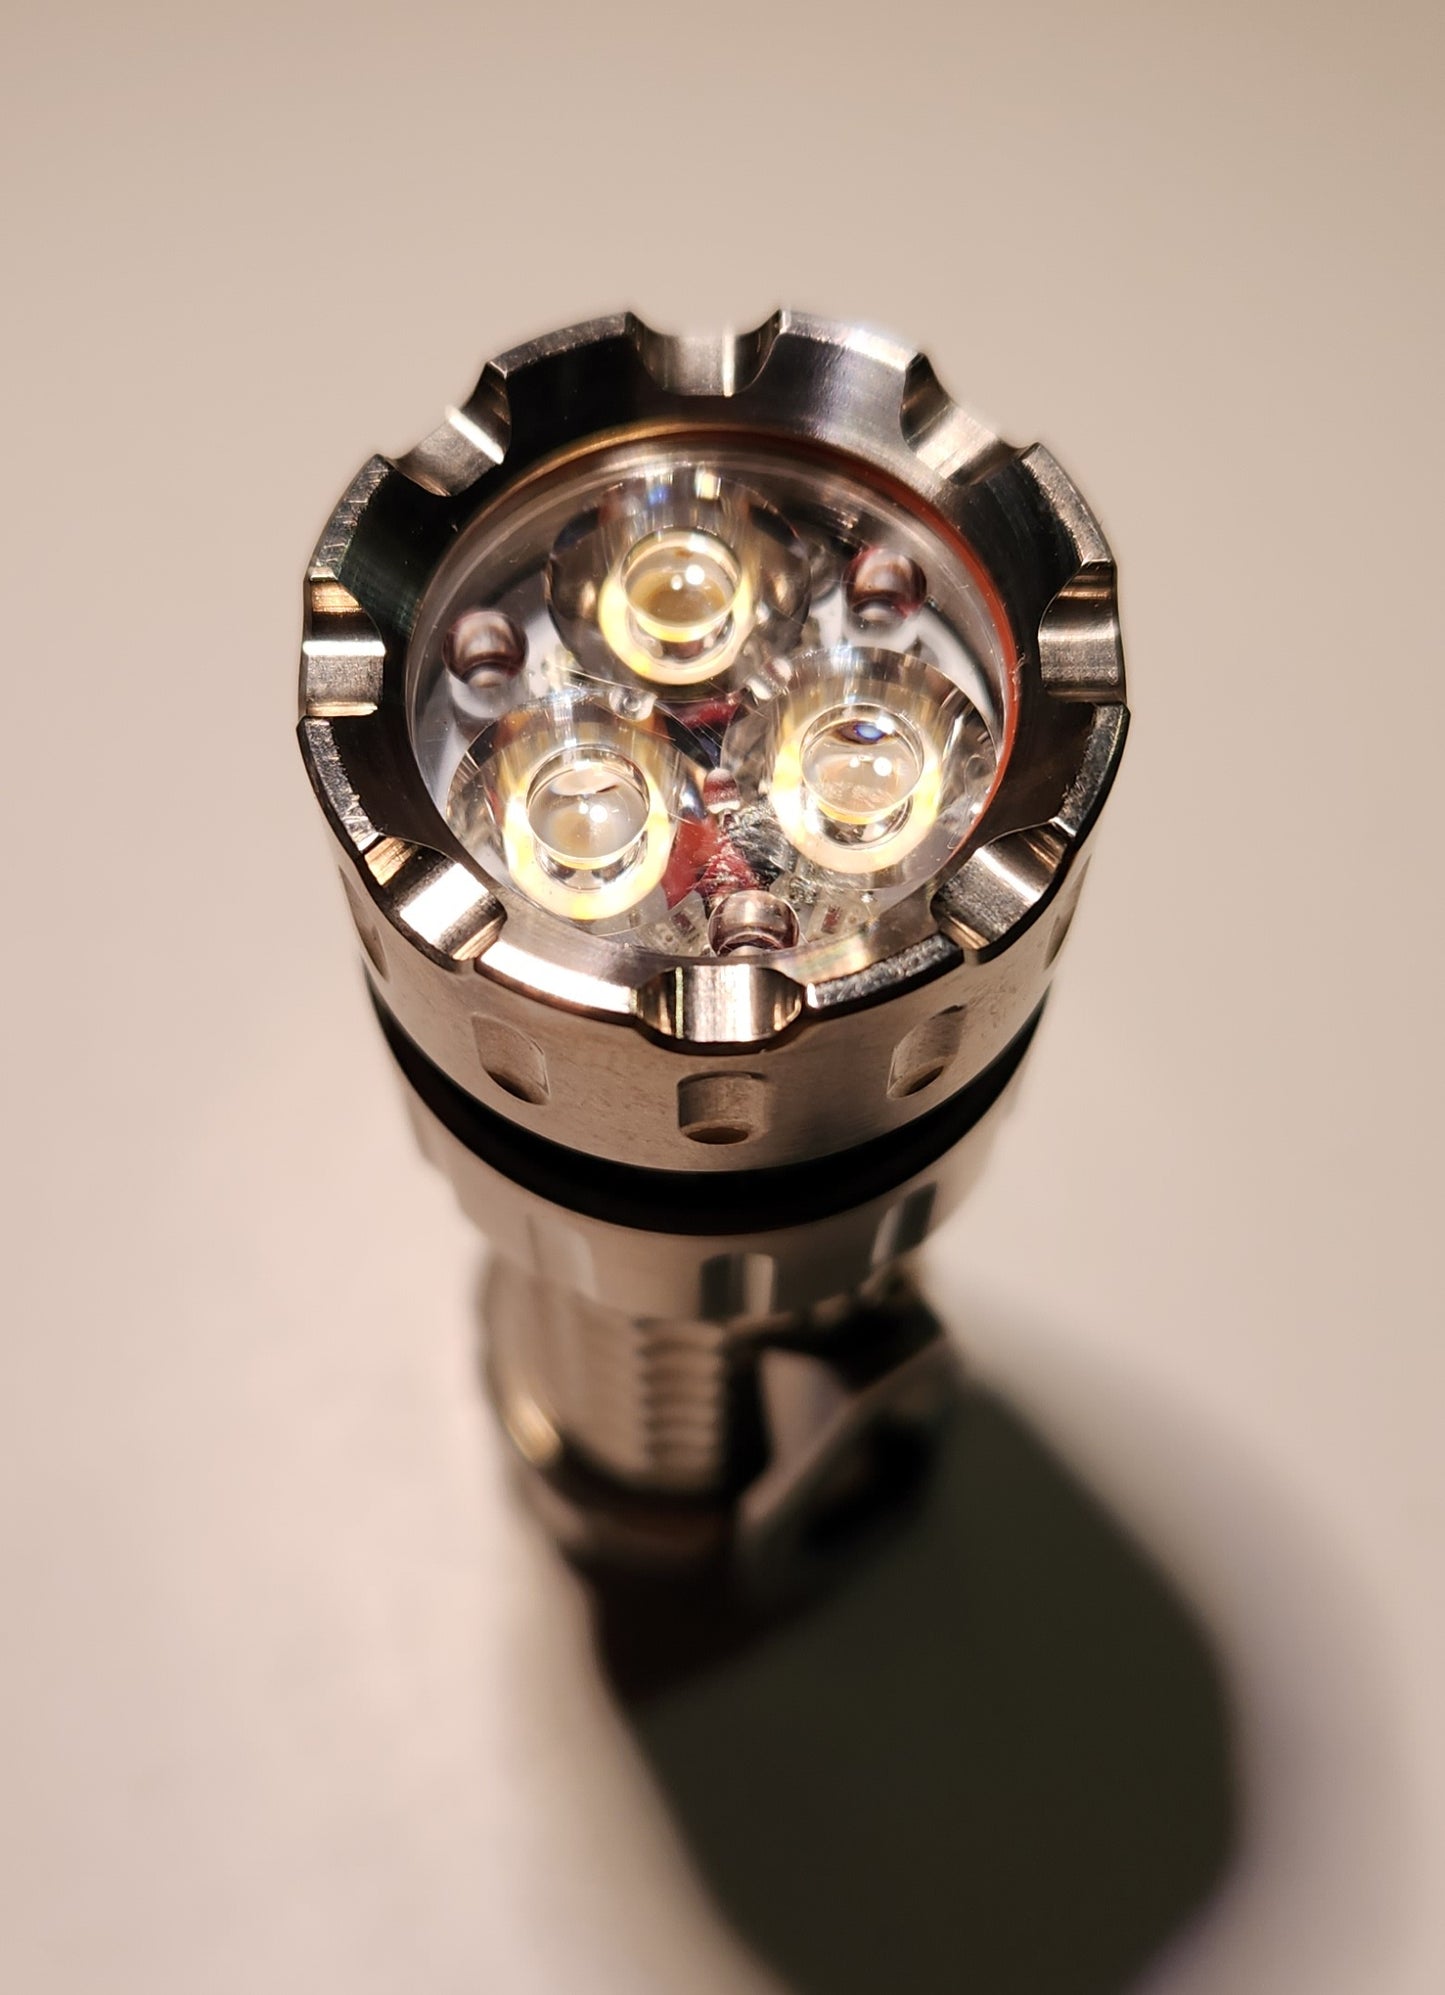 Maeerxu MT3 Titanium 18350 Nichia 519A Led Flashlight